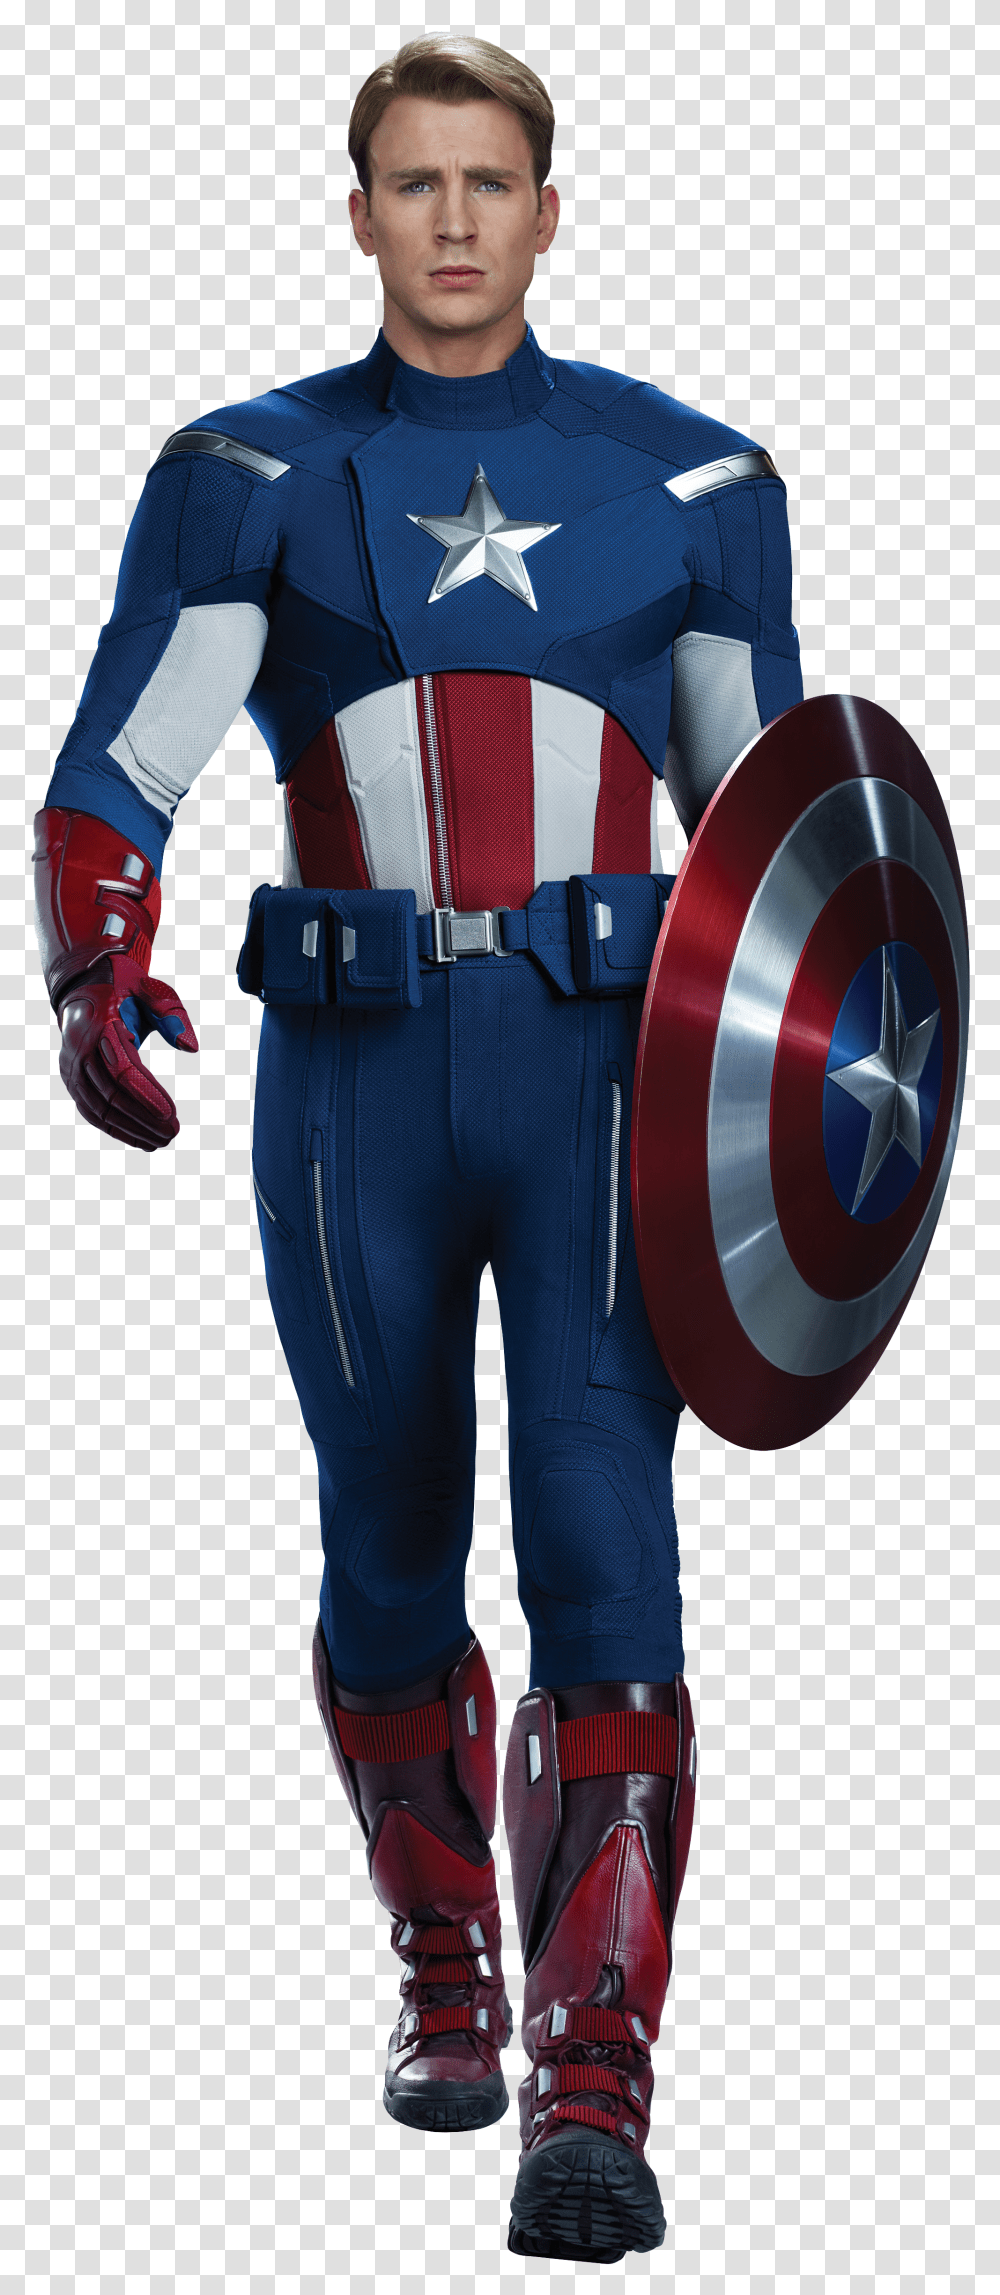 The First Avenger Bucky Barnes Chris Evans The Avengers Captain America Avengers 1 Suit Transparent Png